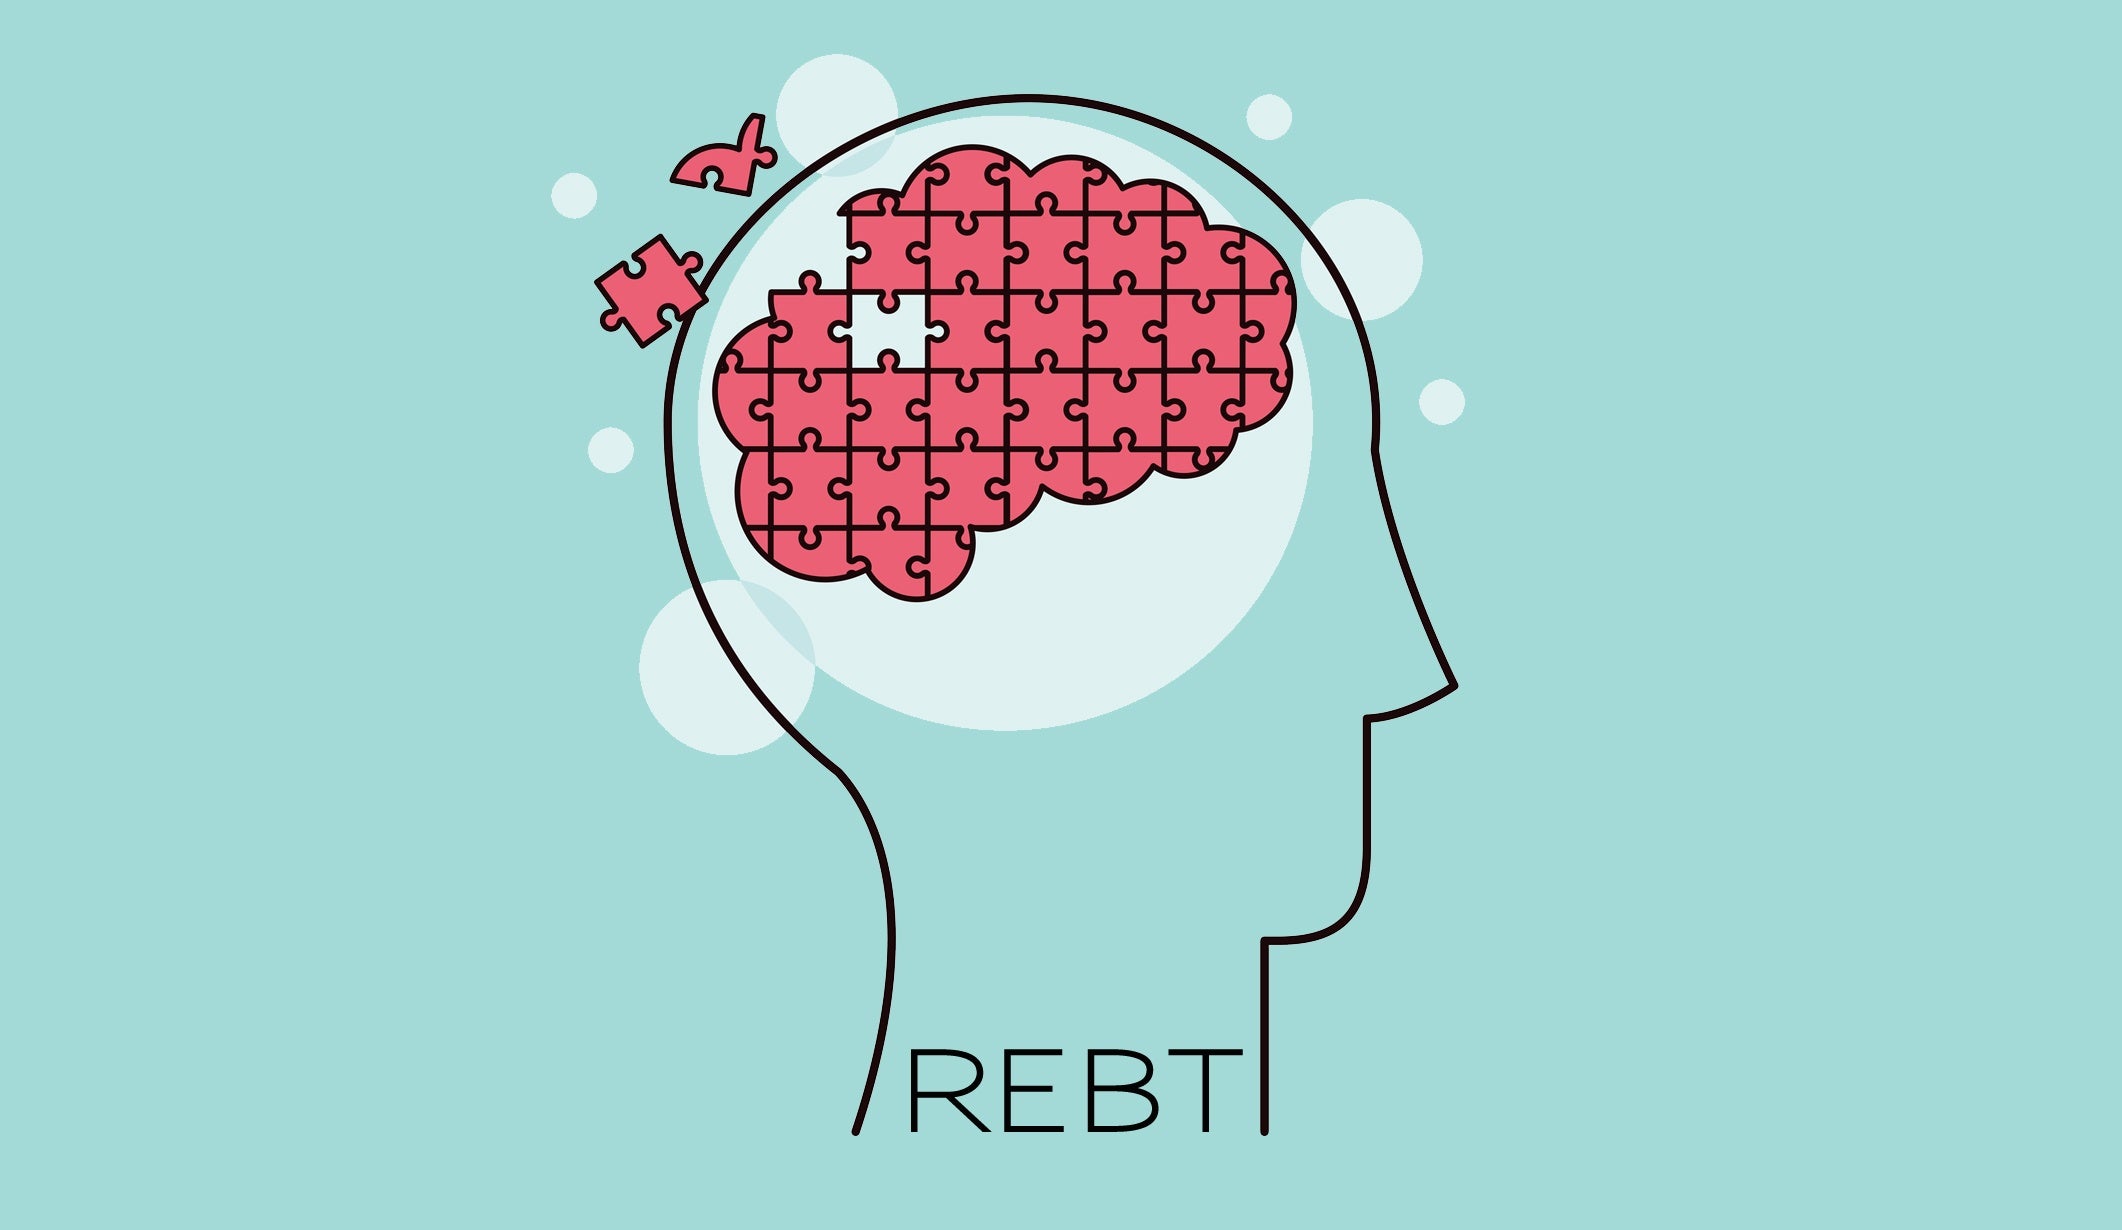 REBT Mindset Mastery (Rational Emotive Behavioral Therapy)